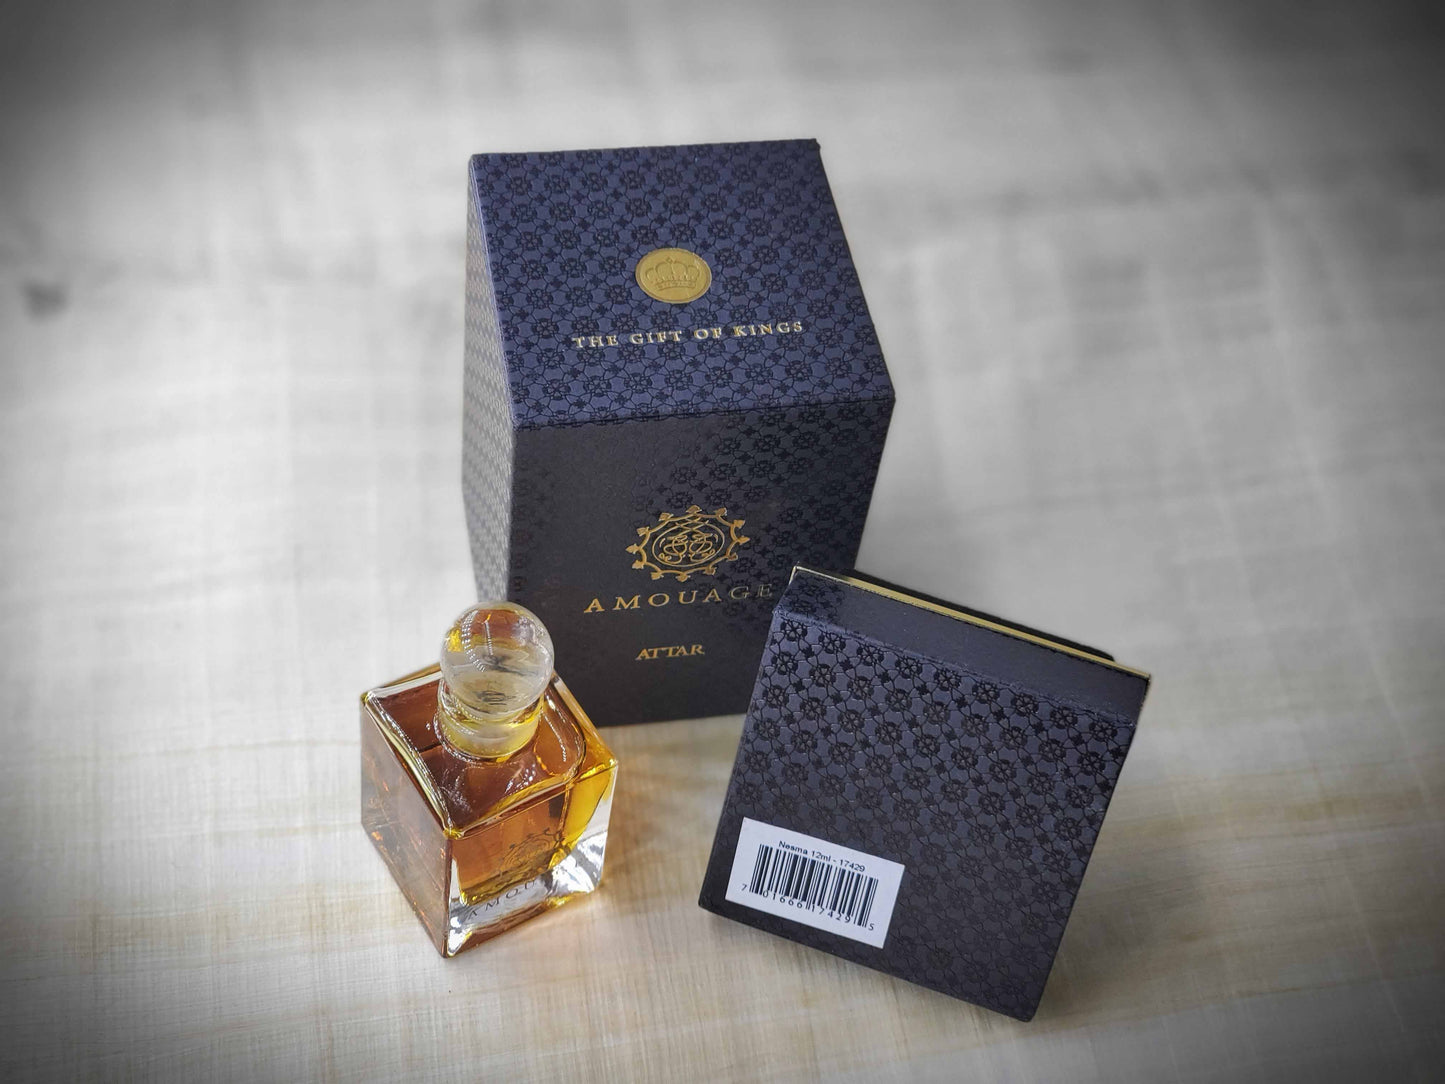 Amouage Nesma Attar Attar The Gift Of Kings Oil Parfum 12 ml 0.4 oz, Rare, Vintage